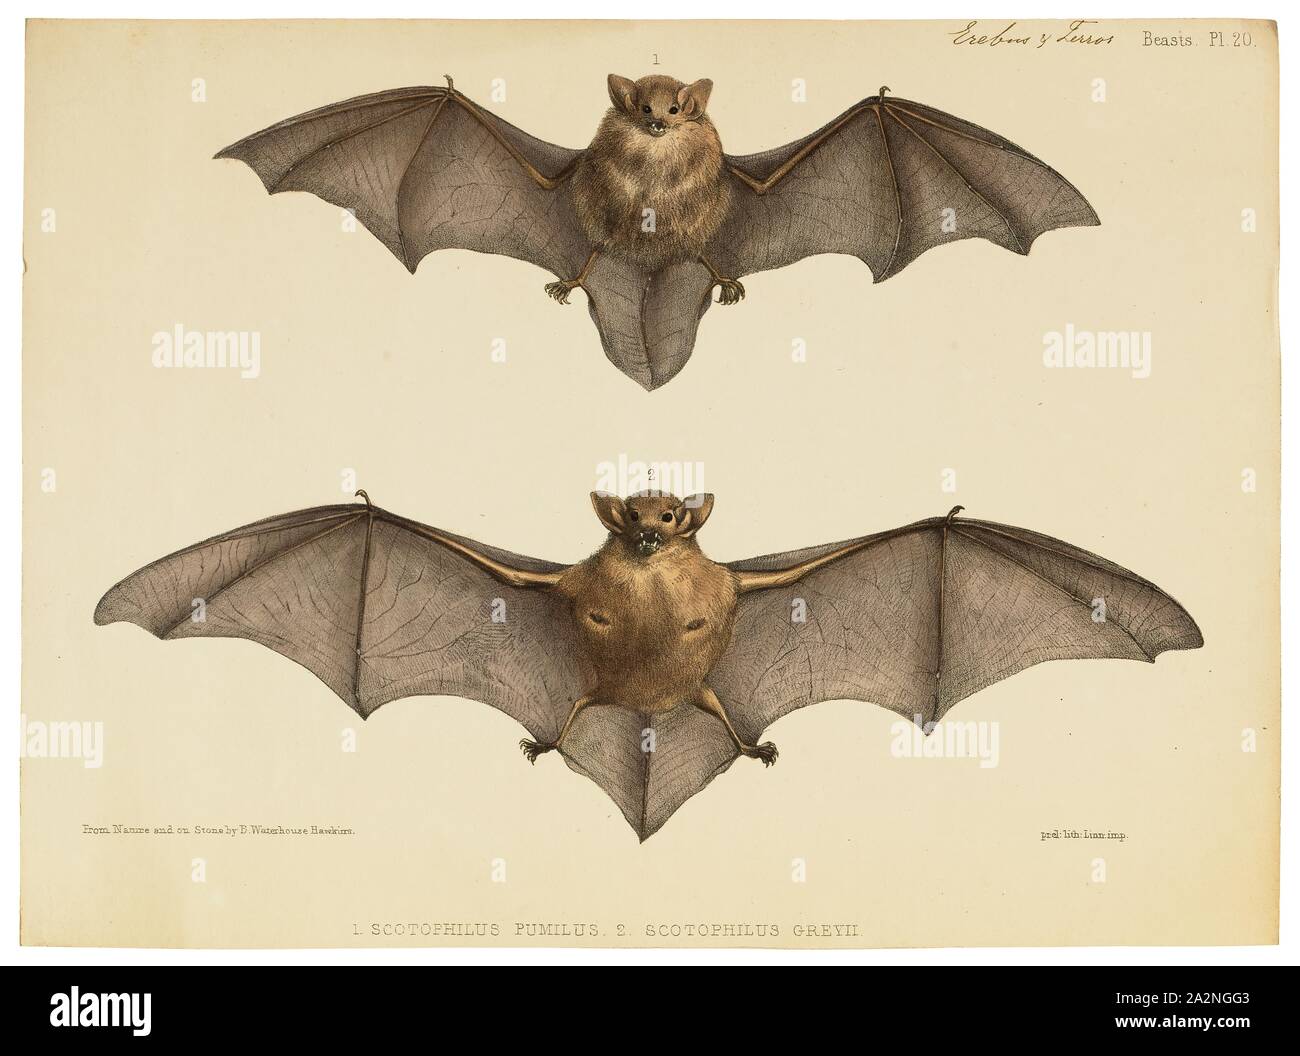 Vespertilionid bats hi-res stock photography and images - Alamy